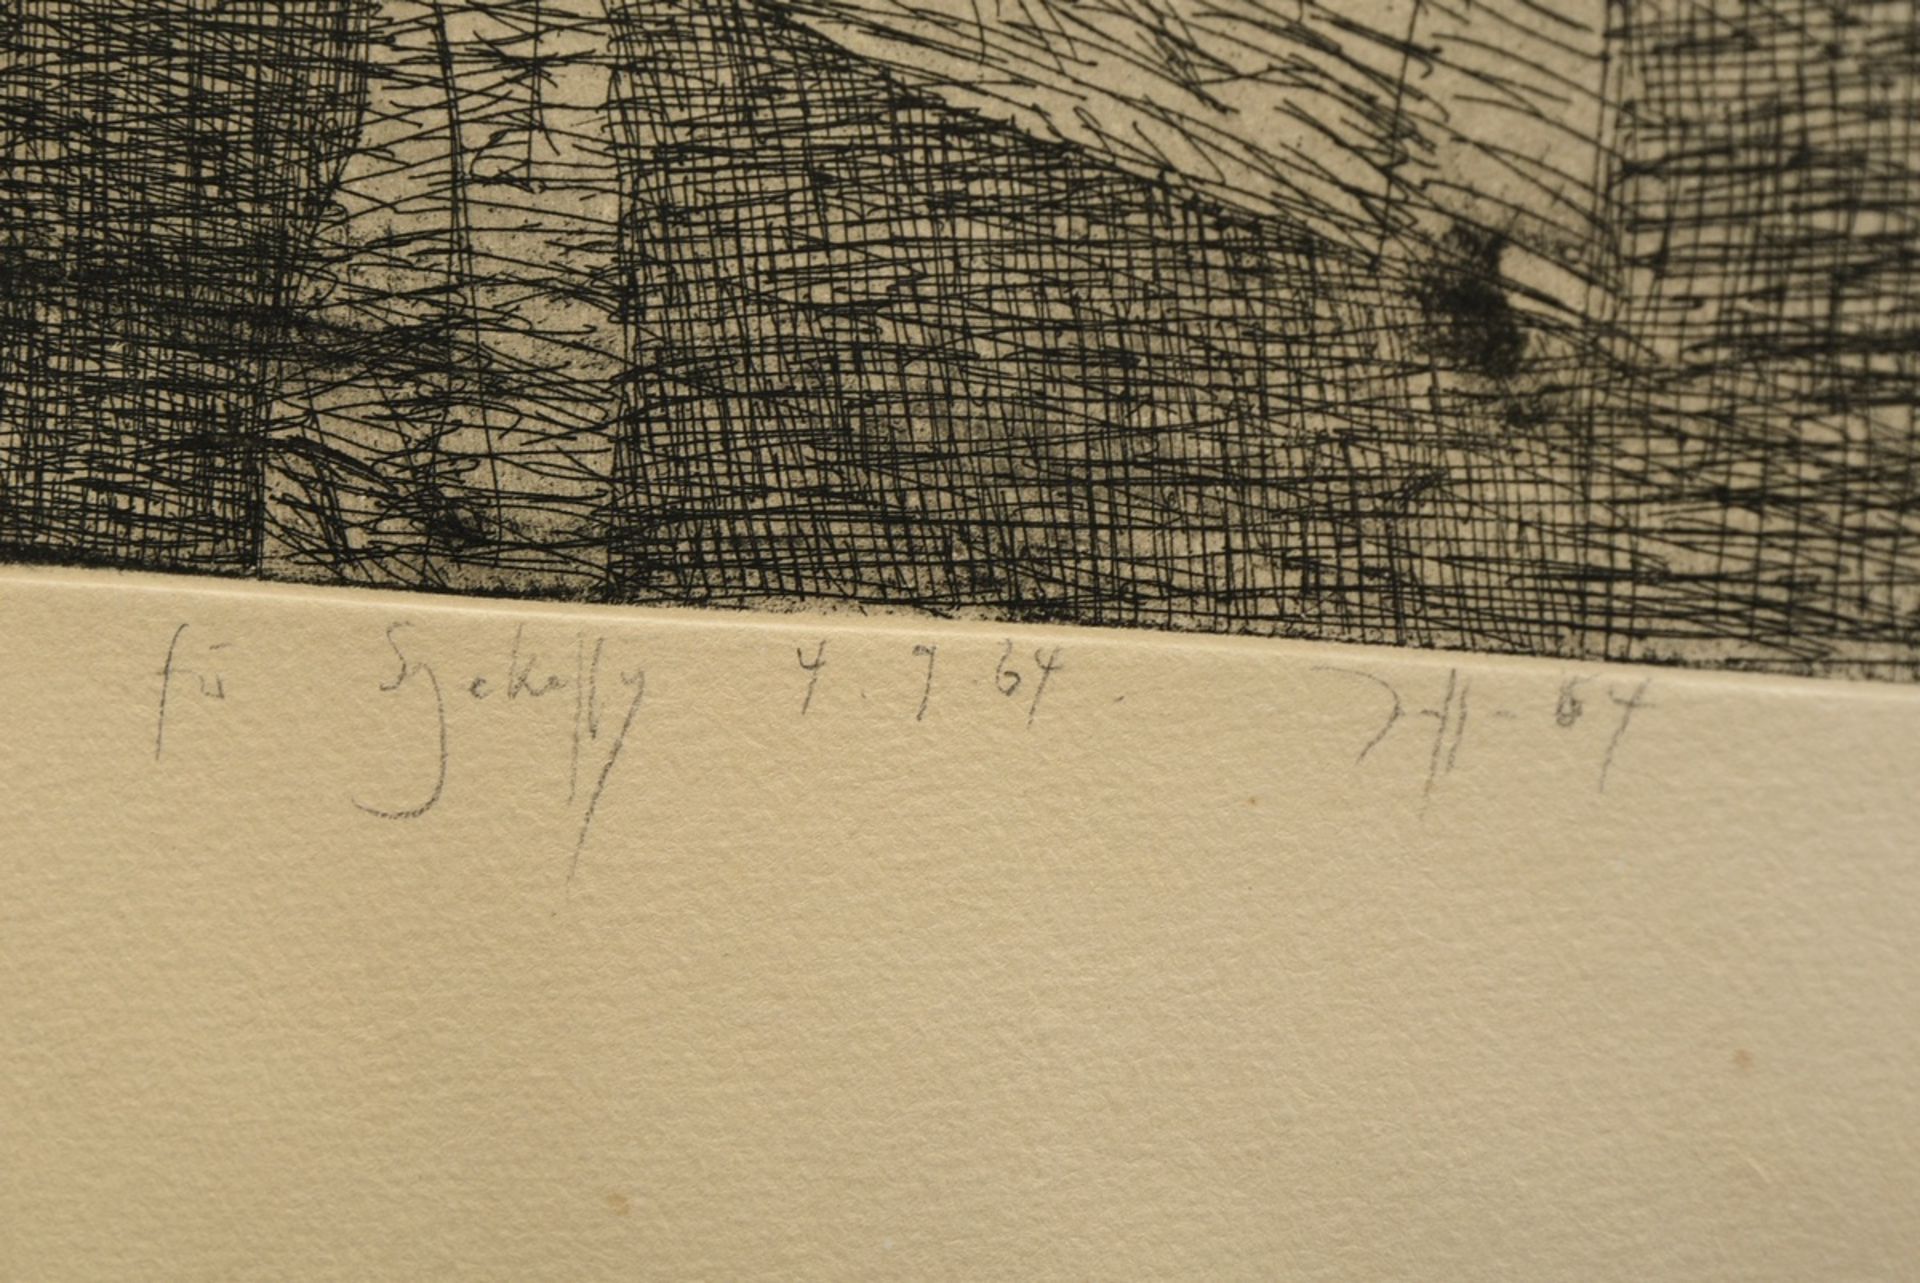 Janssen, Horst (1929-1995) "Absinth" 1964, etching, edition of 40, signed/dated/dedicated "für Szek - Image 3 of 3